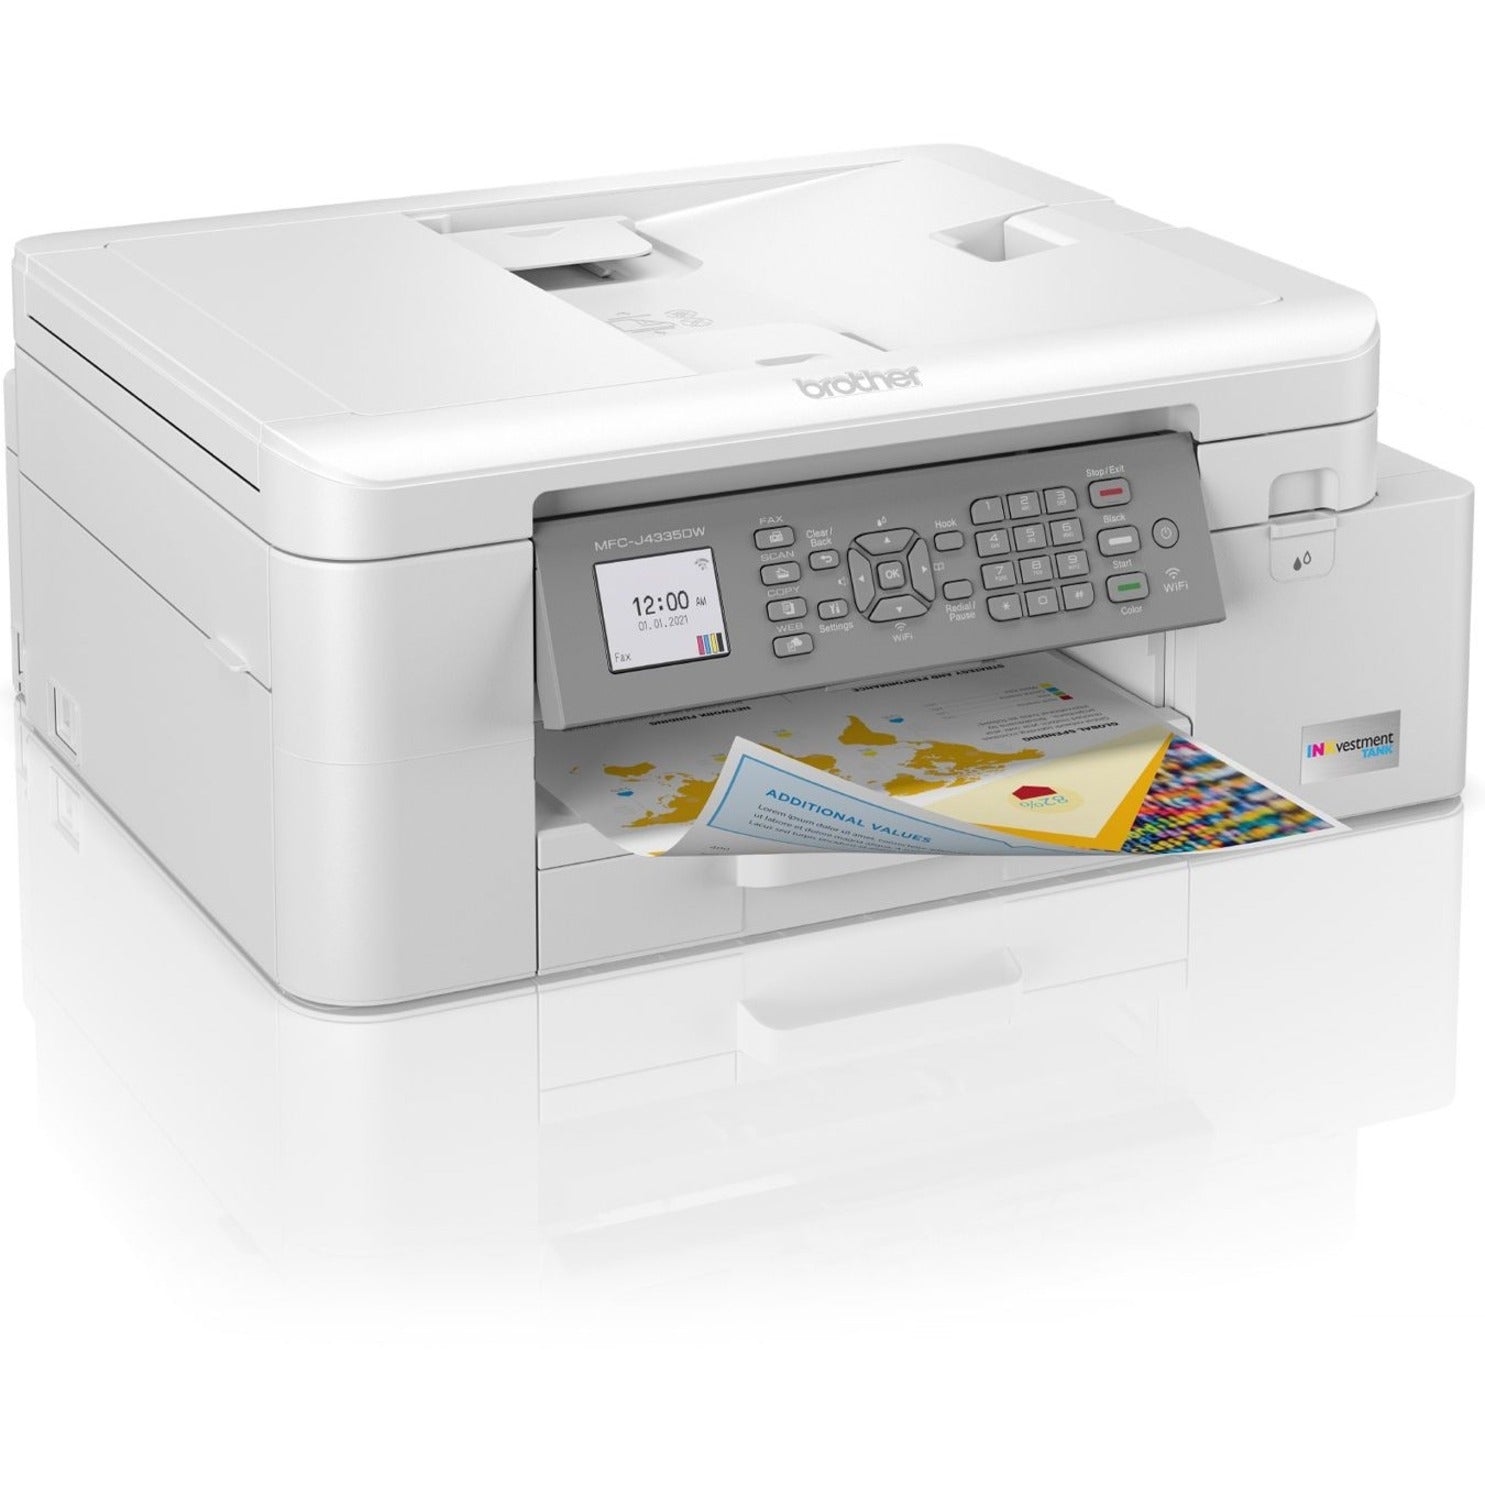 Brother MFCJ4335DW INKvestment Tank Printer, Wireless Inkjet Multifunction Printer, Color, Automatic Duplex Printing, 20 ppm Mono Print Speed, 19 ppm Color Print Speed, 4800 x 1200 Maximum Print Resolution